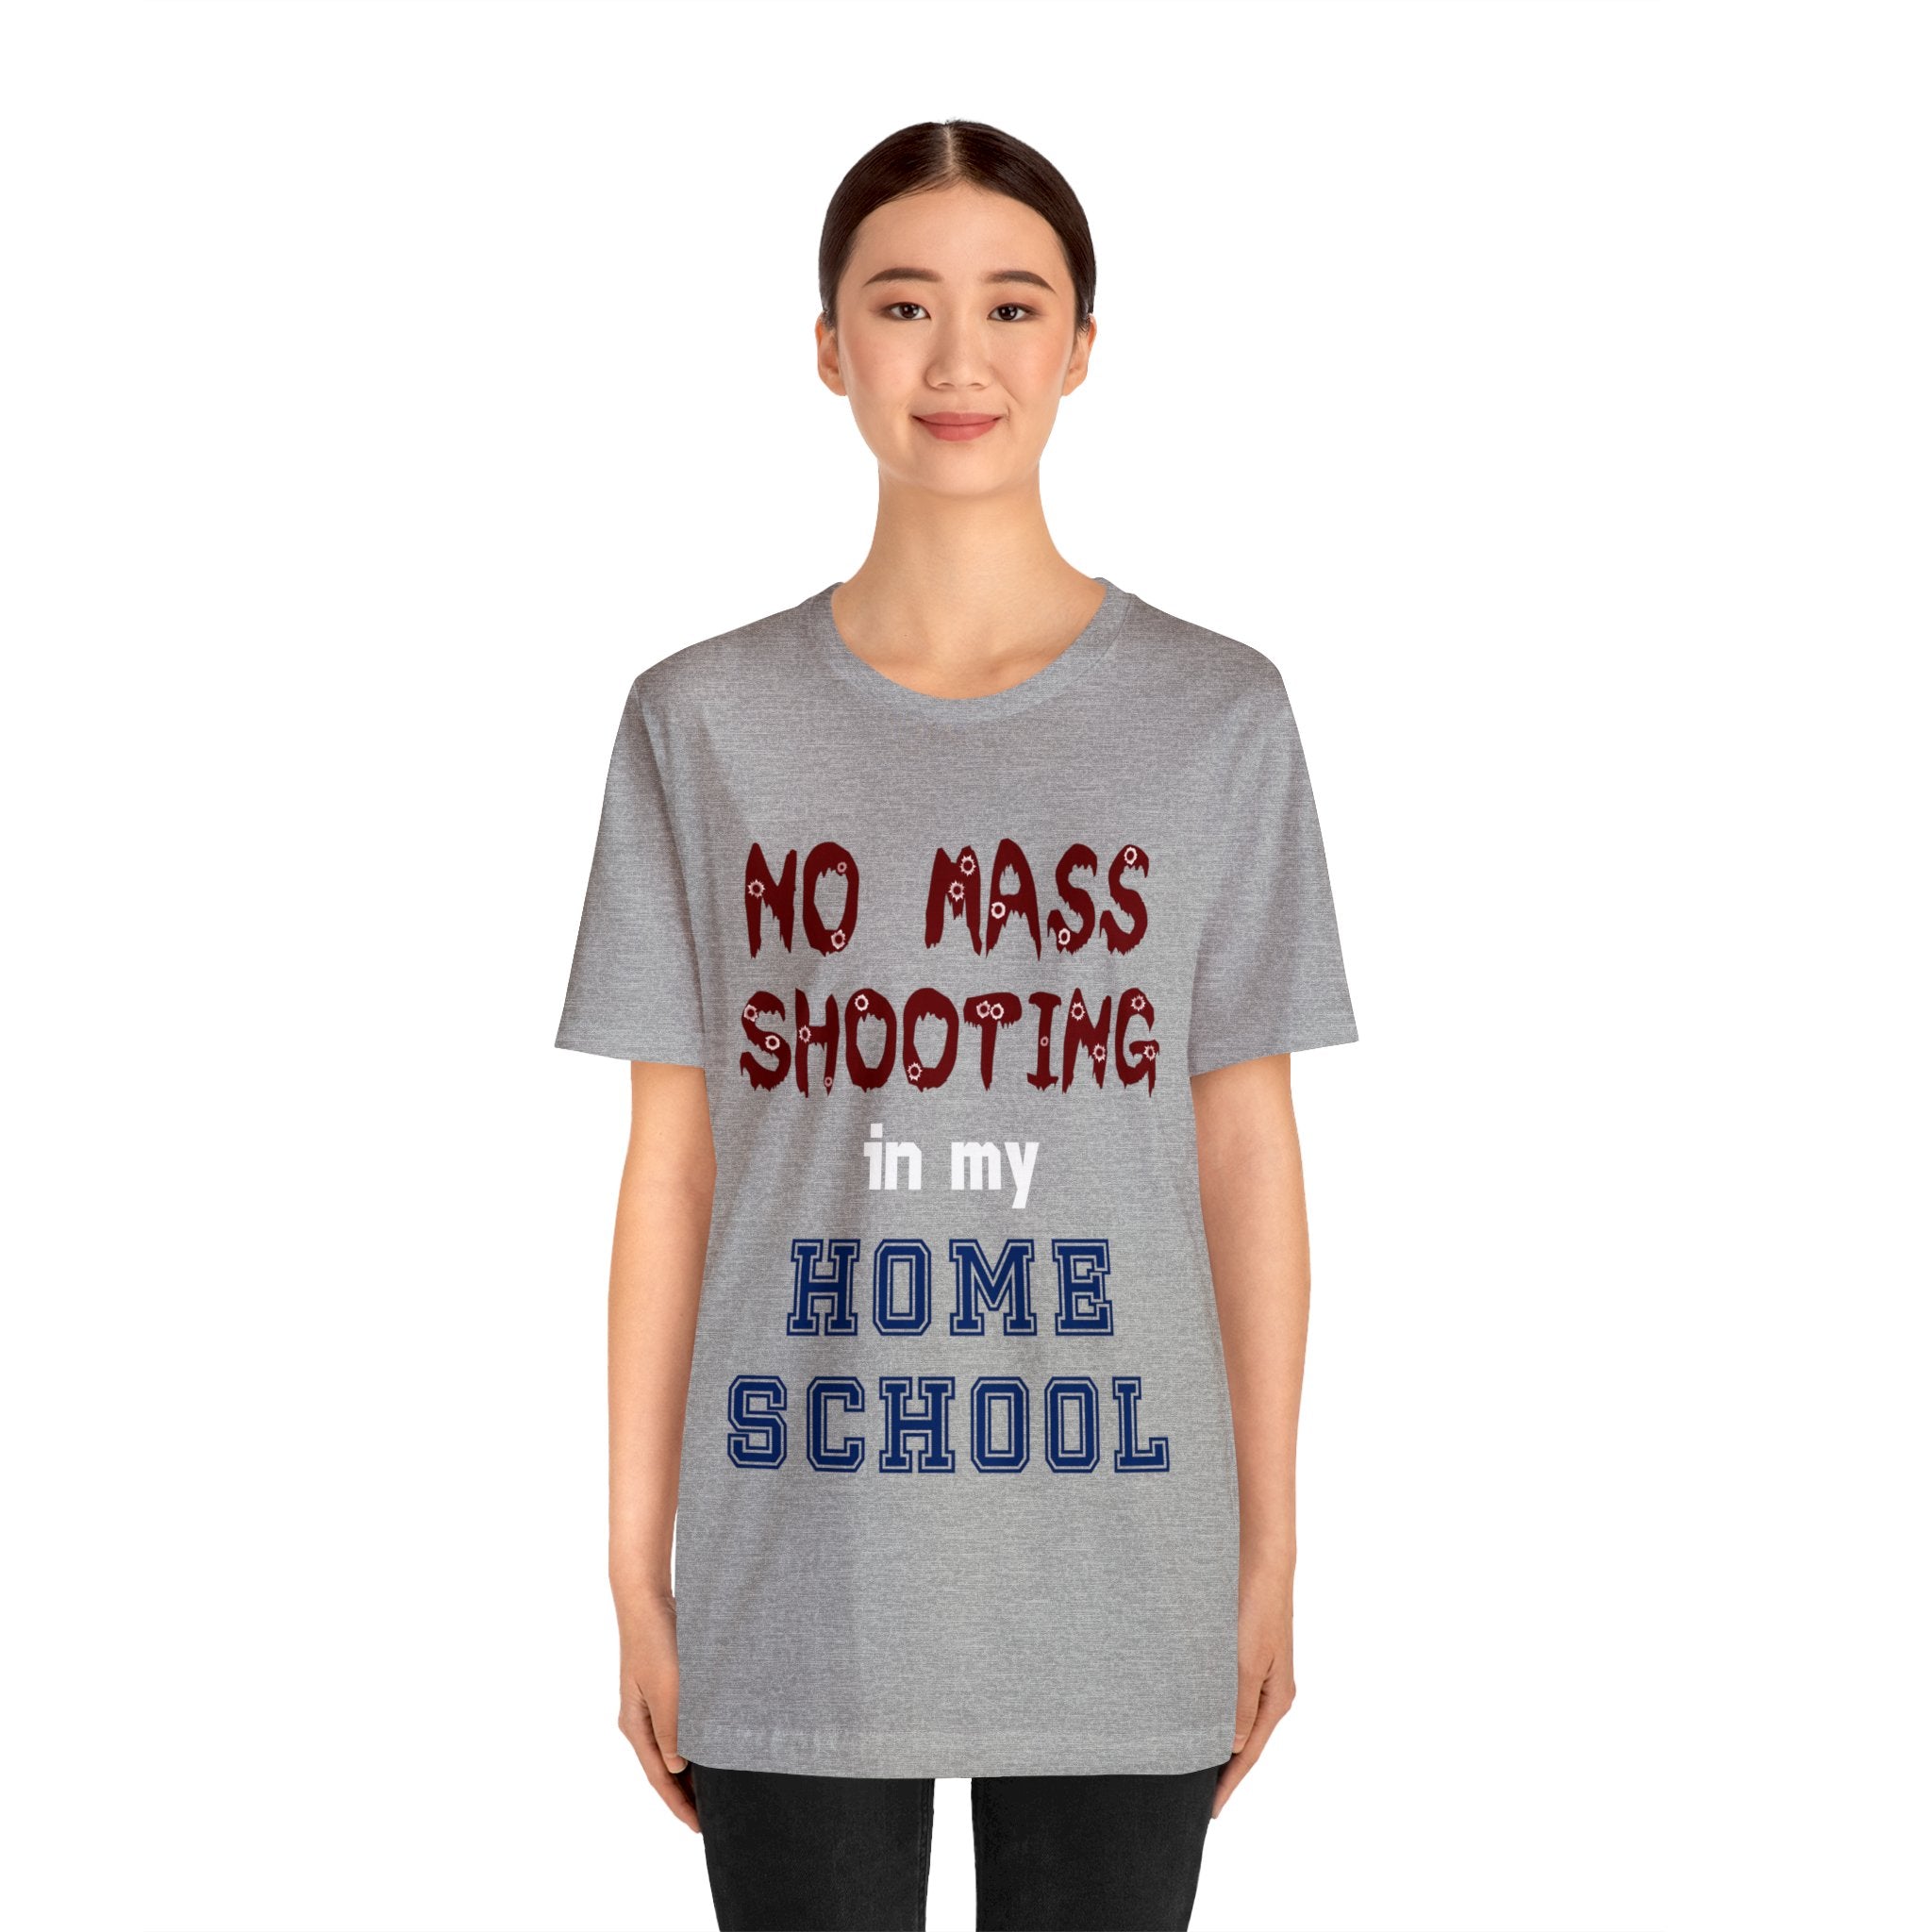 No Mass Shooting in My Home School